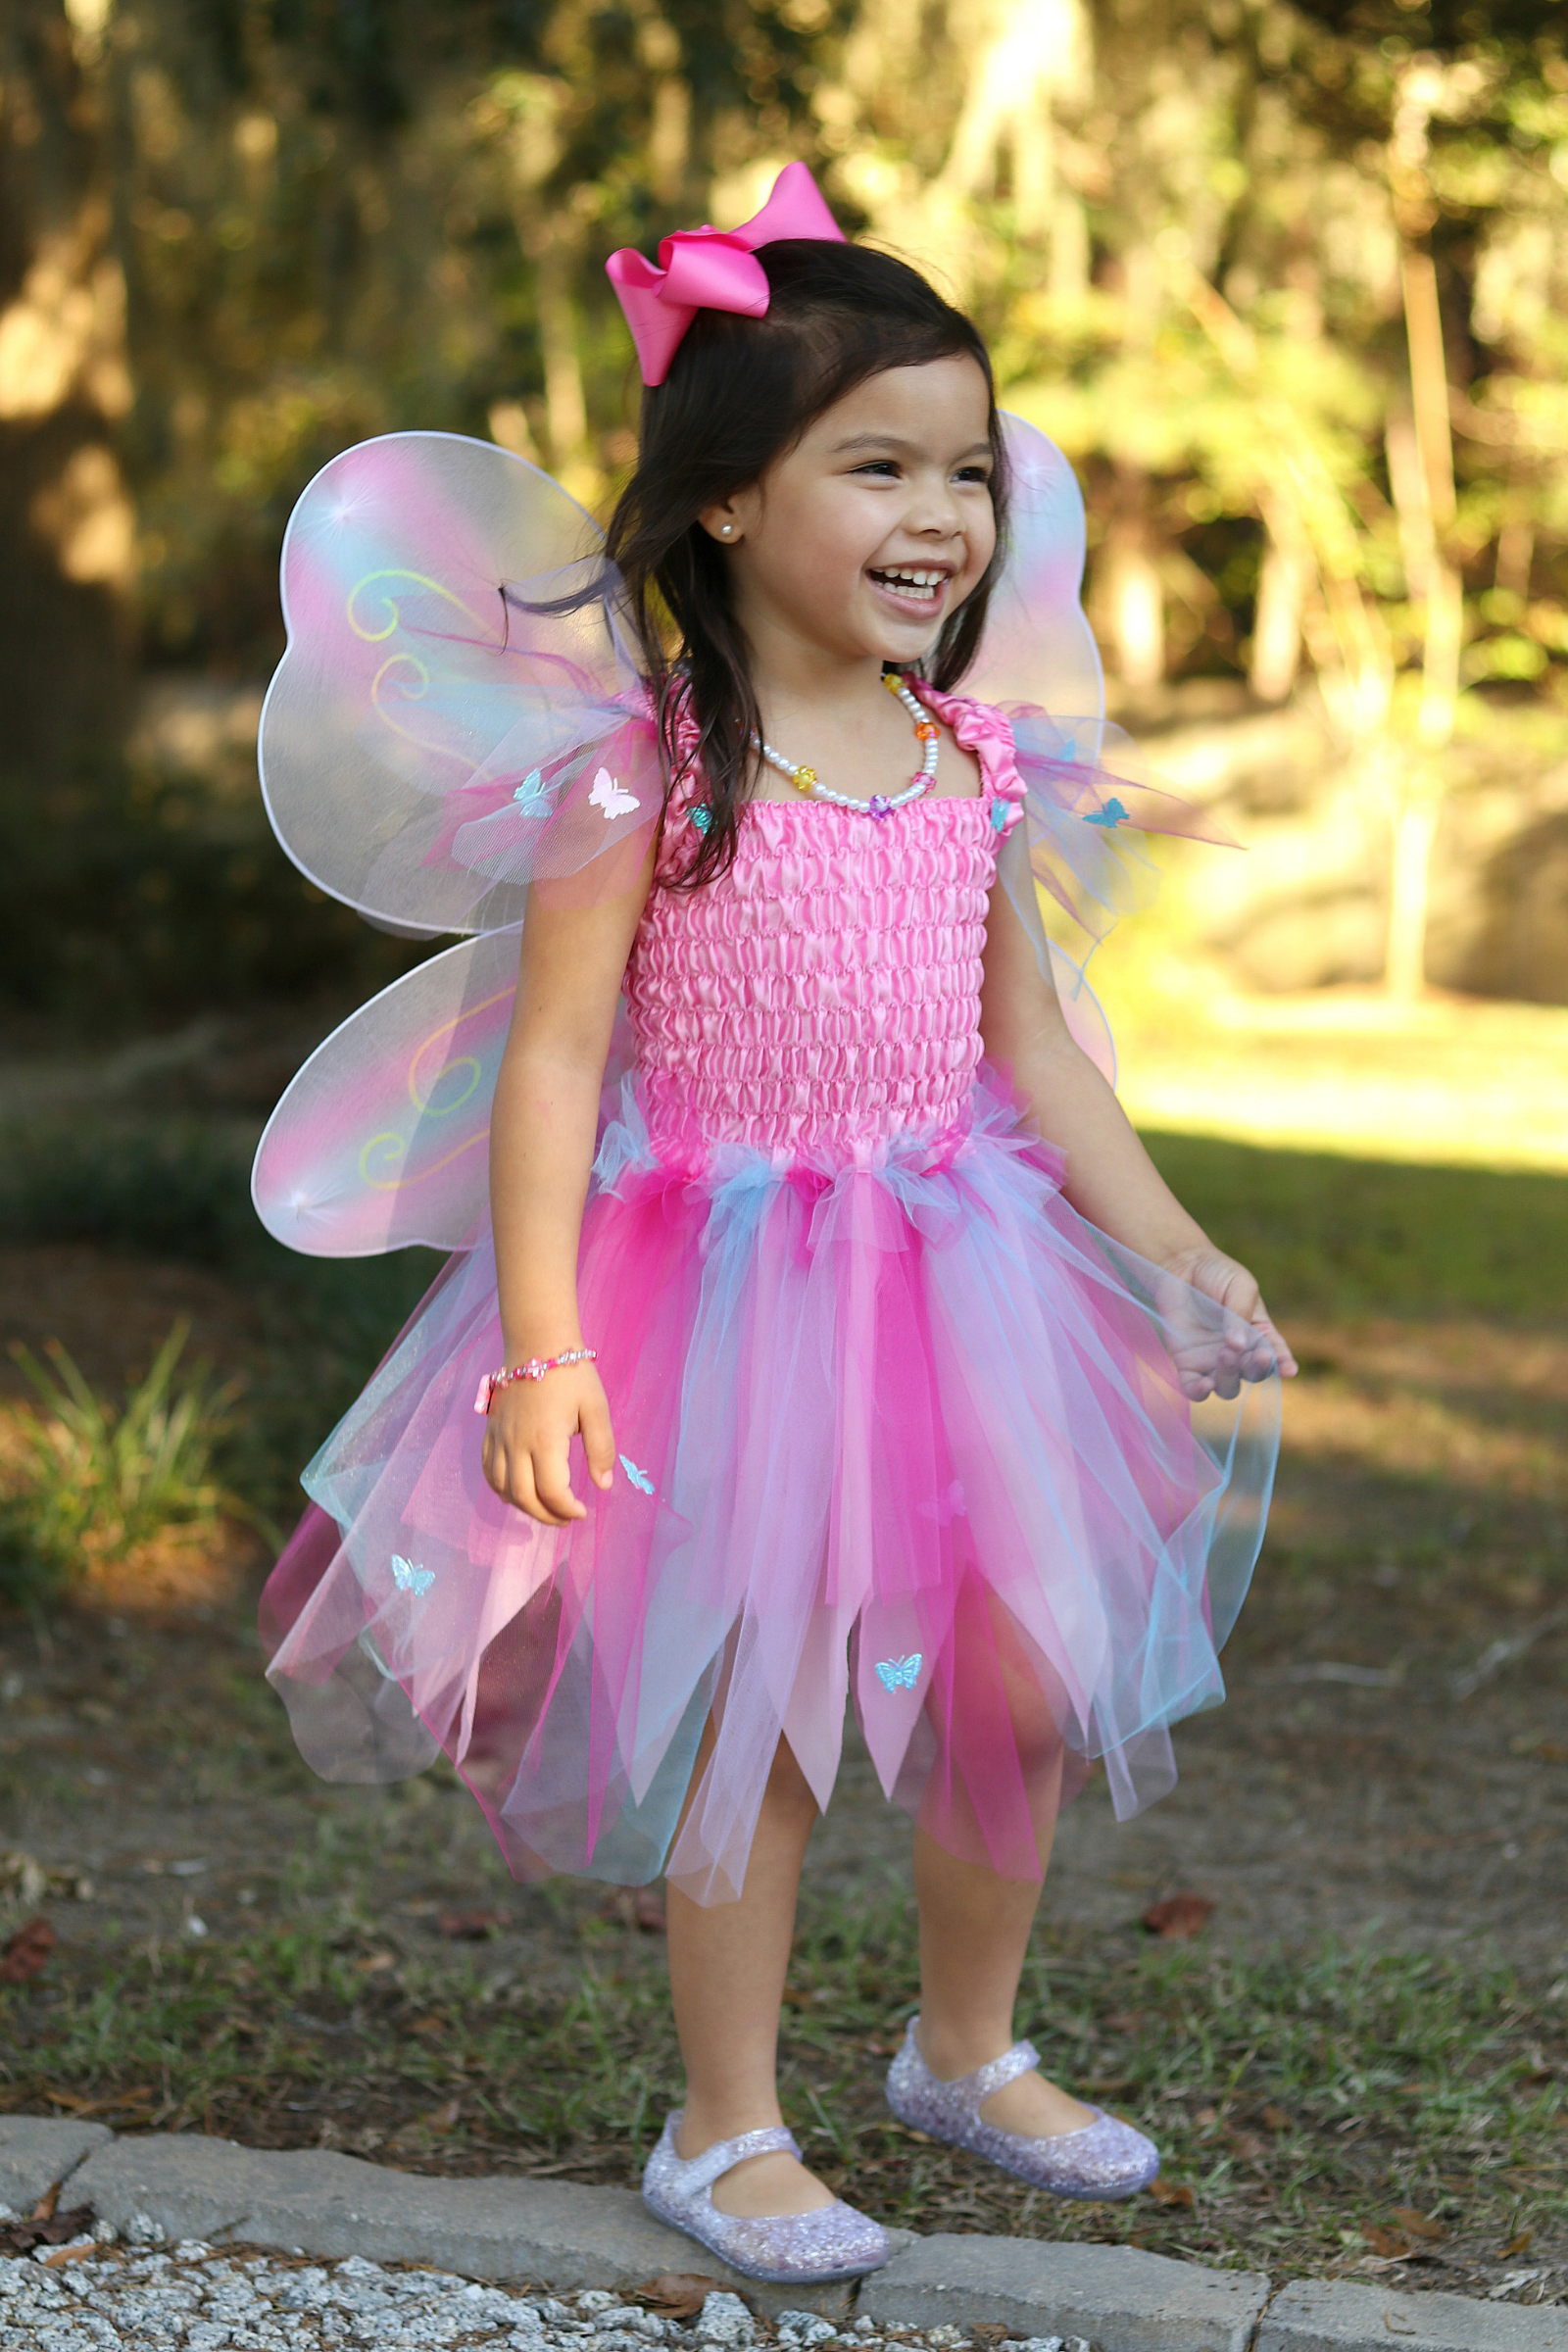 Little Girl Fairy Wings Pink Dress Stock Photo 1369166300 | Shutterstock